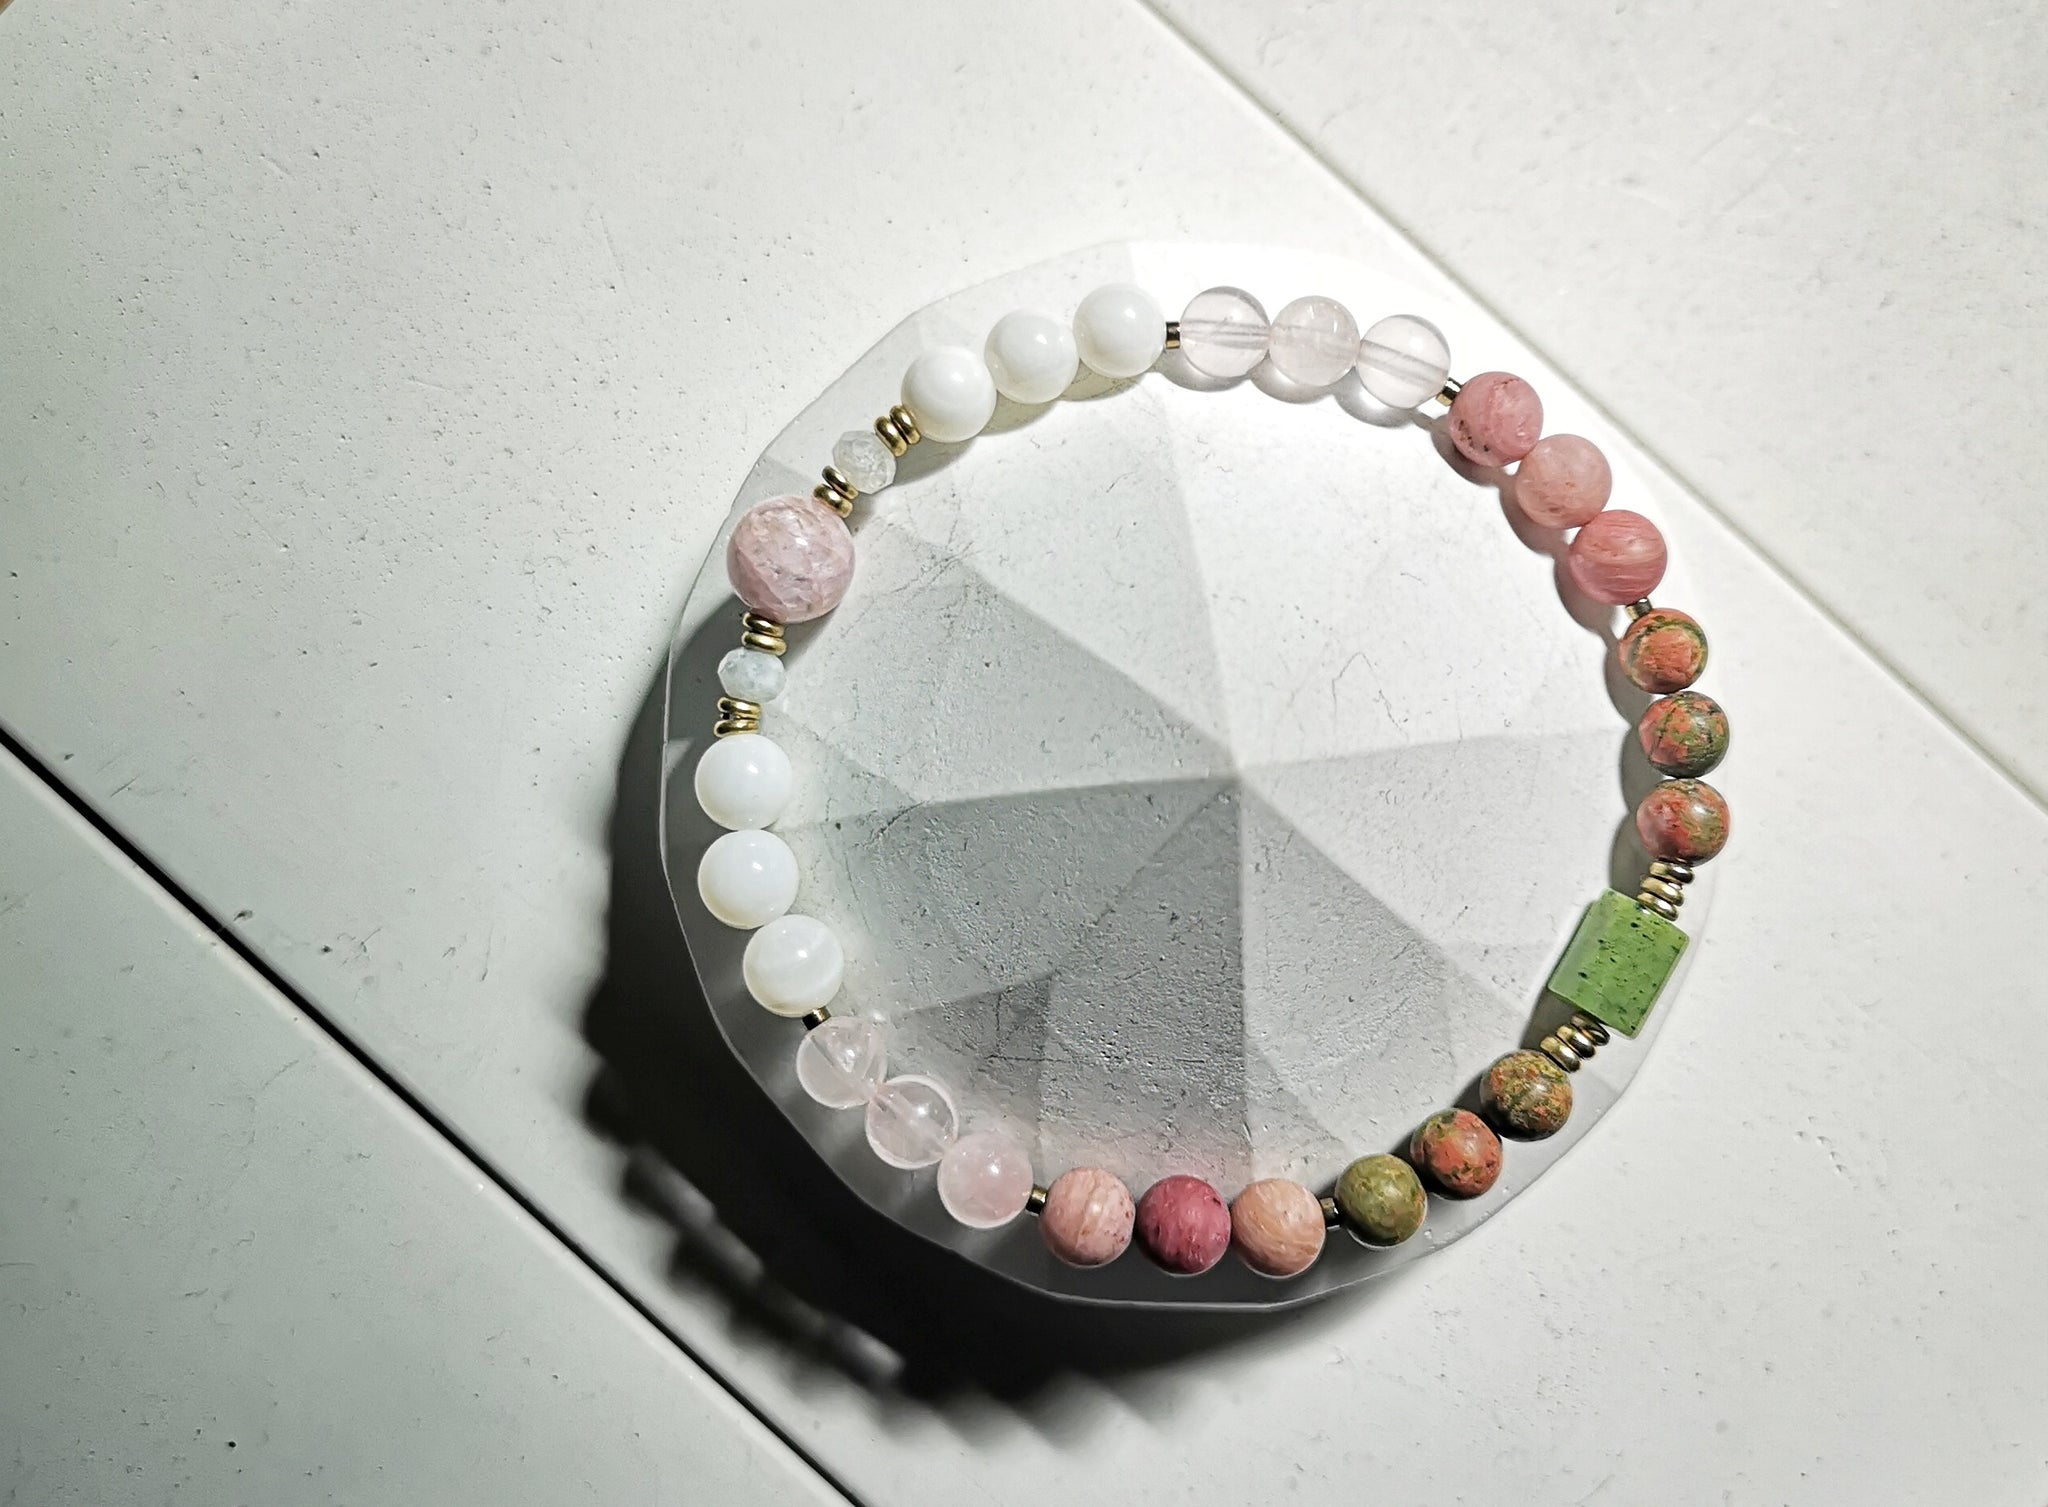 Inanna Bracelet / High Quality Crystal Bracelet helps support fertility, pregnancy and motherhood